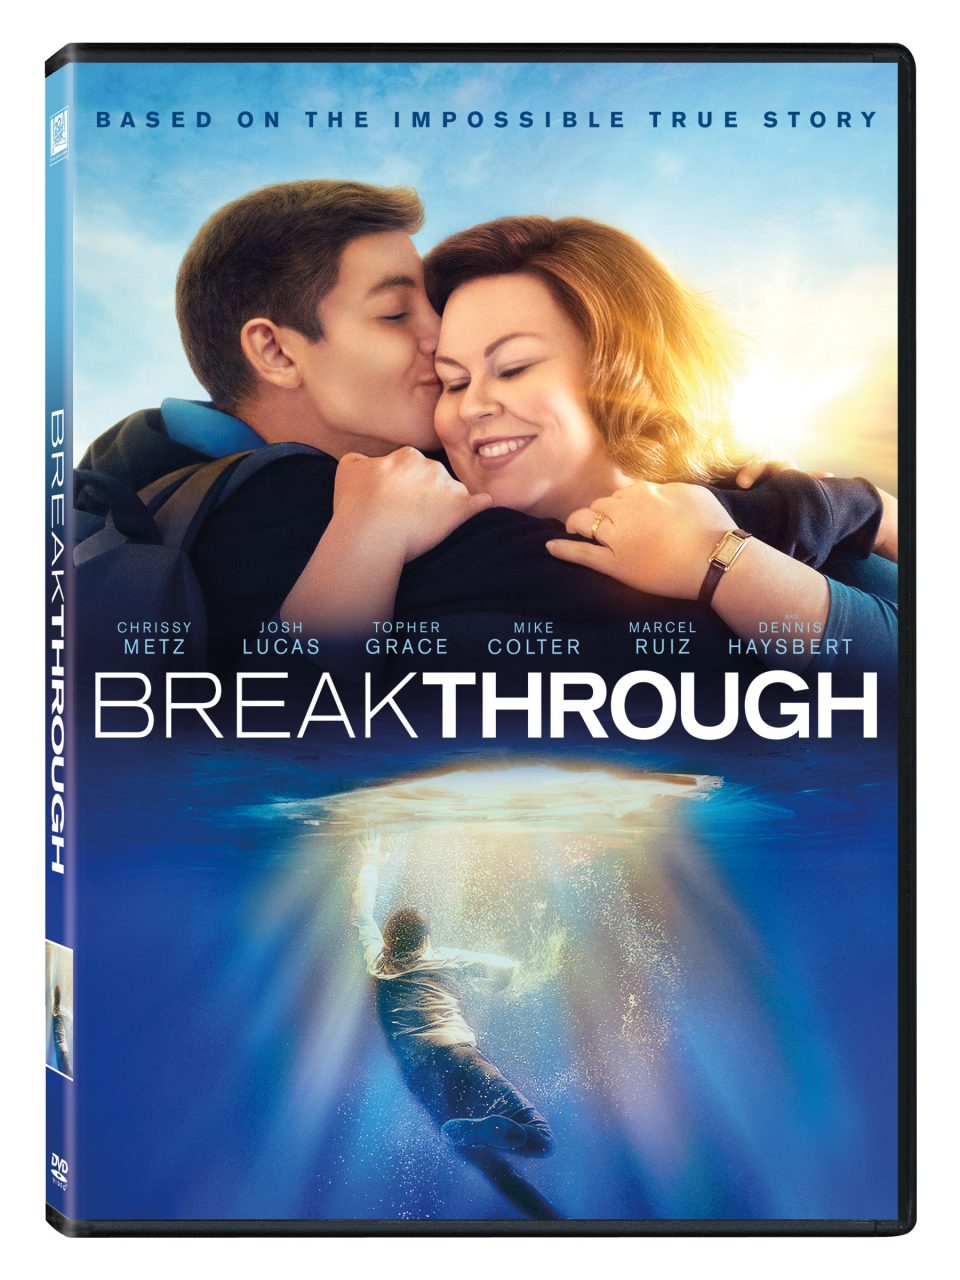 Breakthrugh DVD cover (20th Century Fox Home Entertainment)